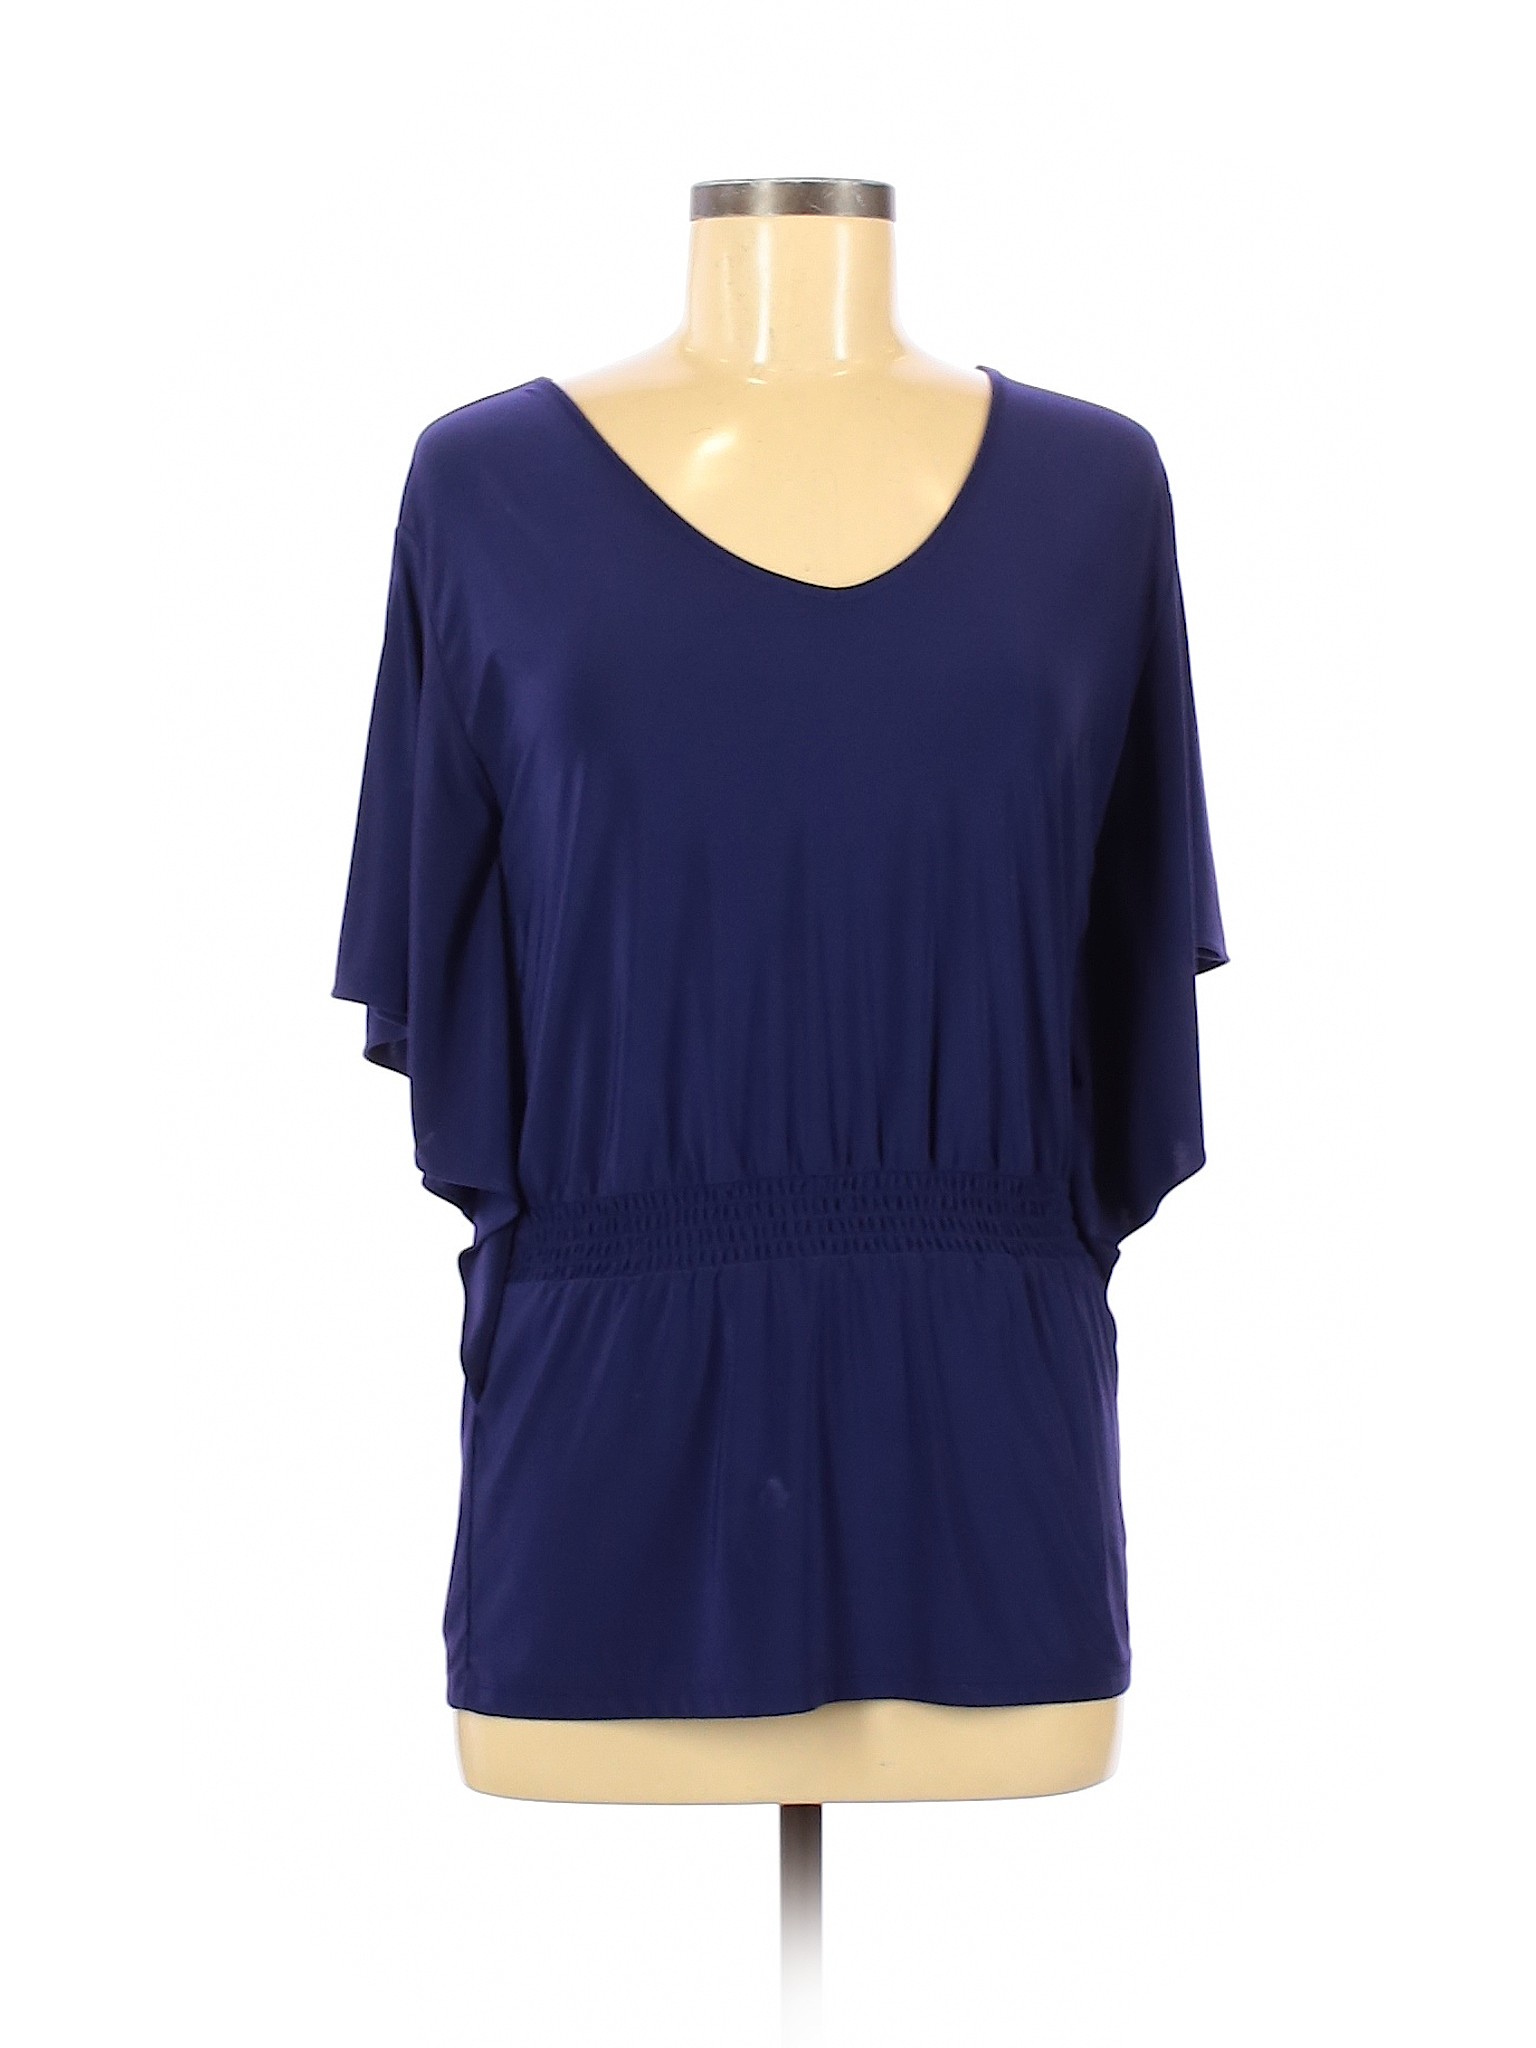 The Limited Women Purple Short Sleeve Top S | eBay